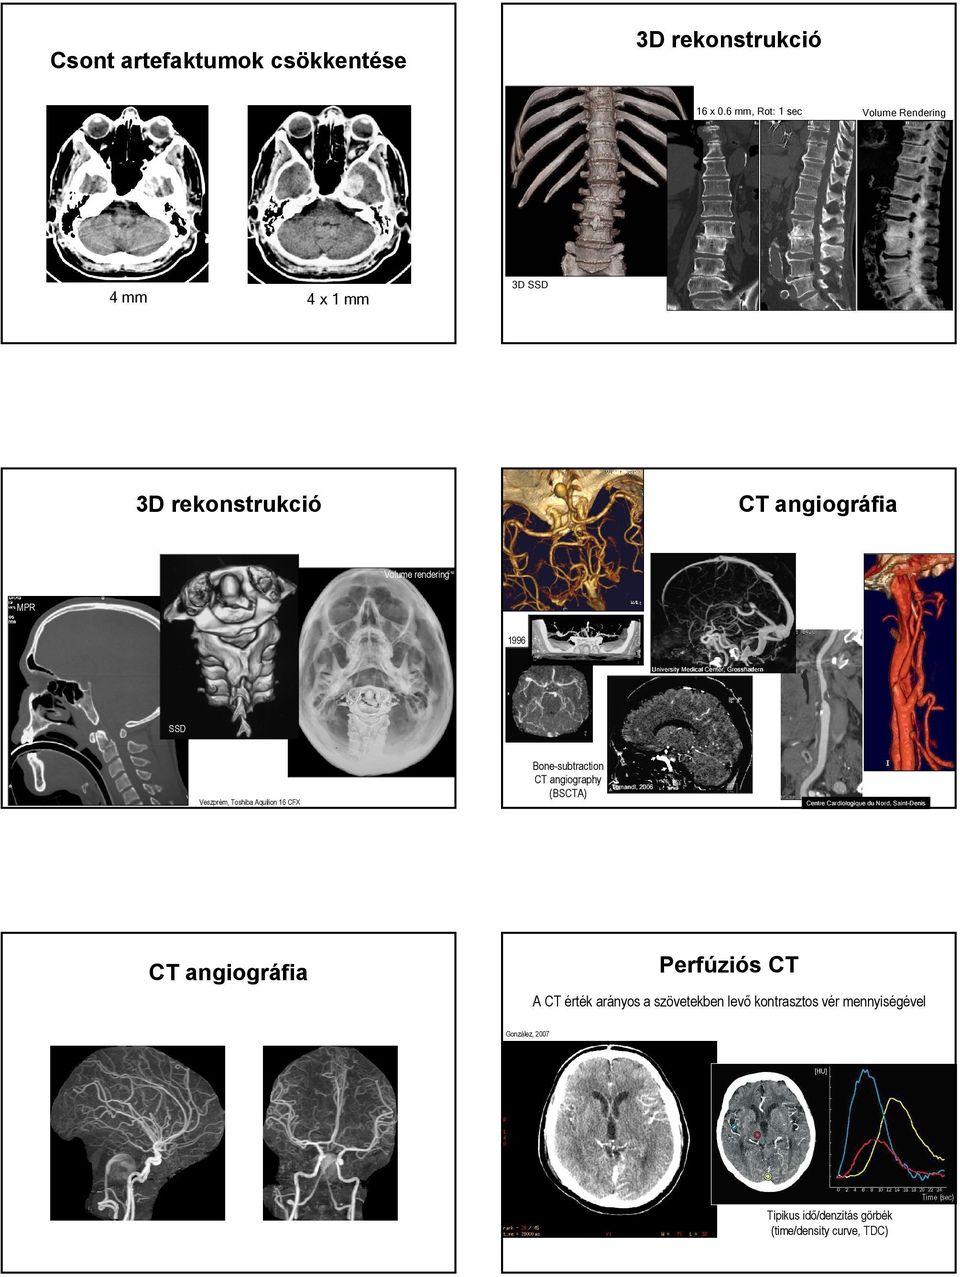 Center, Center, Grosshadern SSD Veszprém, Toshiba Aquilion 16 CFX Bone-subtraction CT angiography (BSCTA) Tomandl, Tomandl, 2006